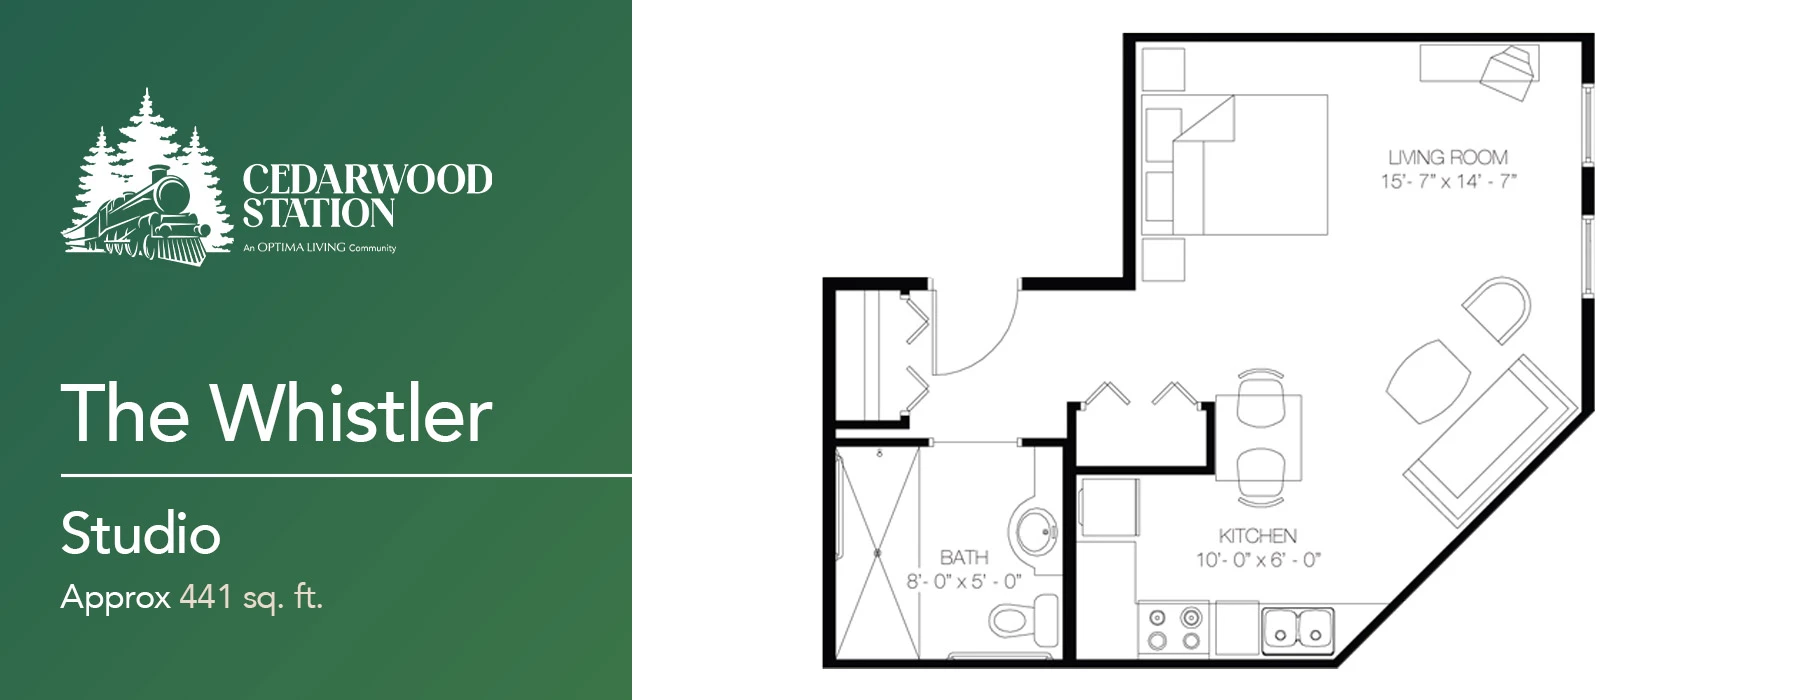 The Whistler Studio floor plan